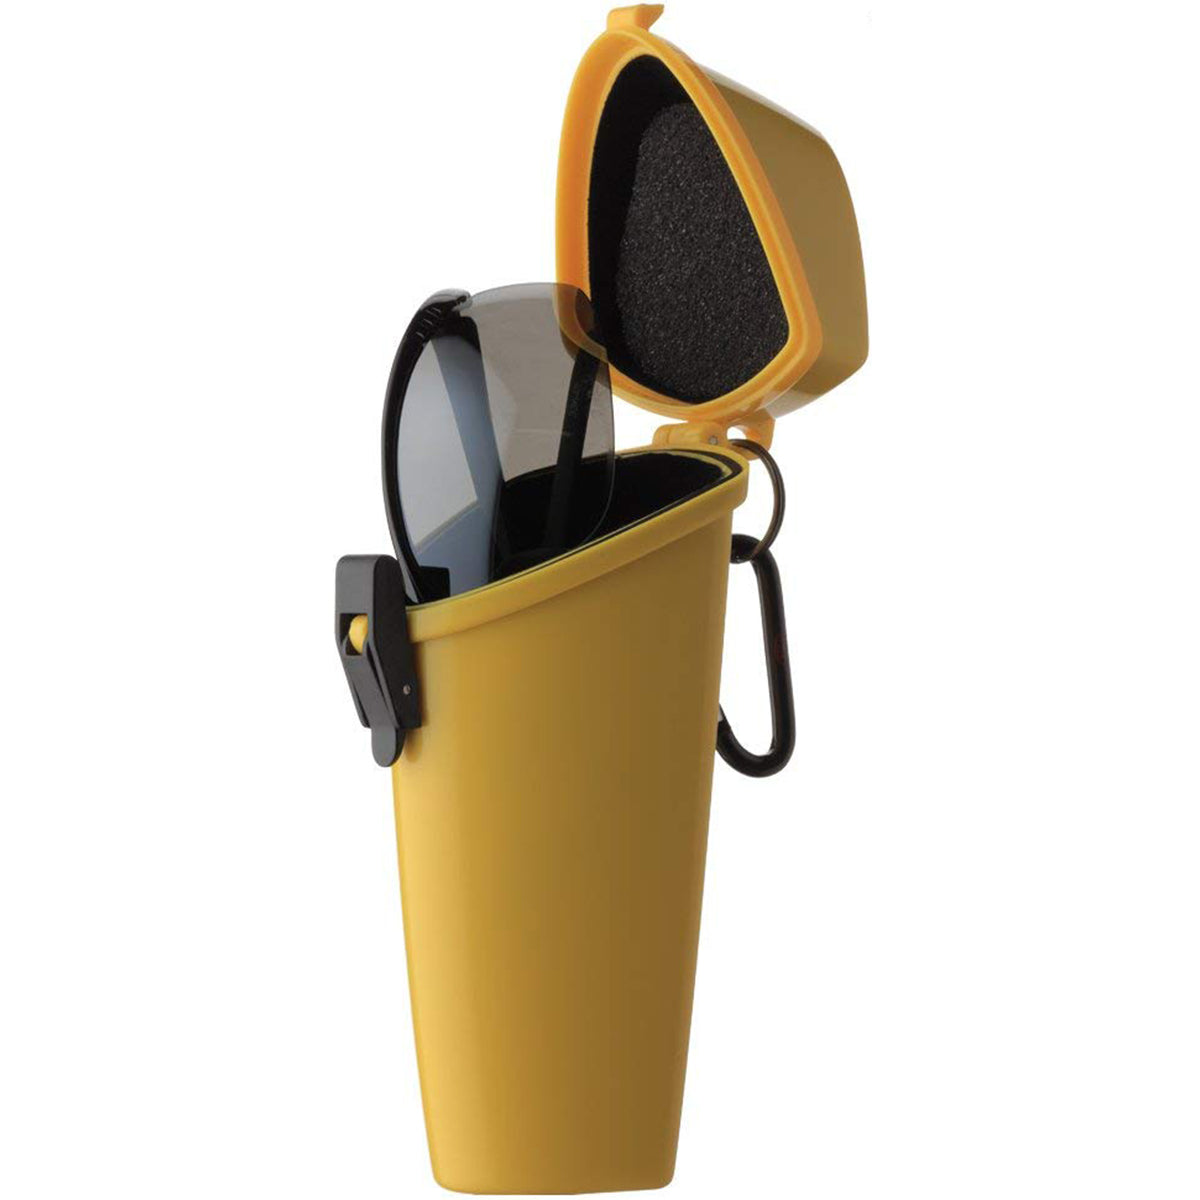 Witz The Wrapper Lightweight Waterproof Eyeglass Case with Carabiner - Yellow Witz